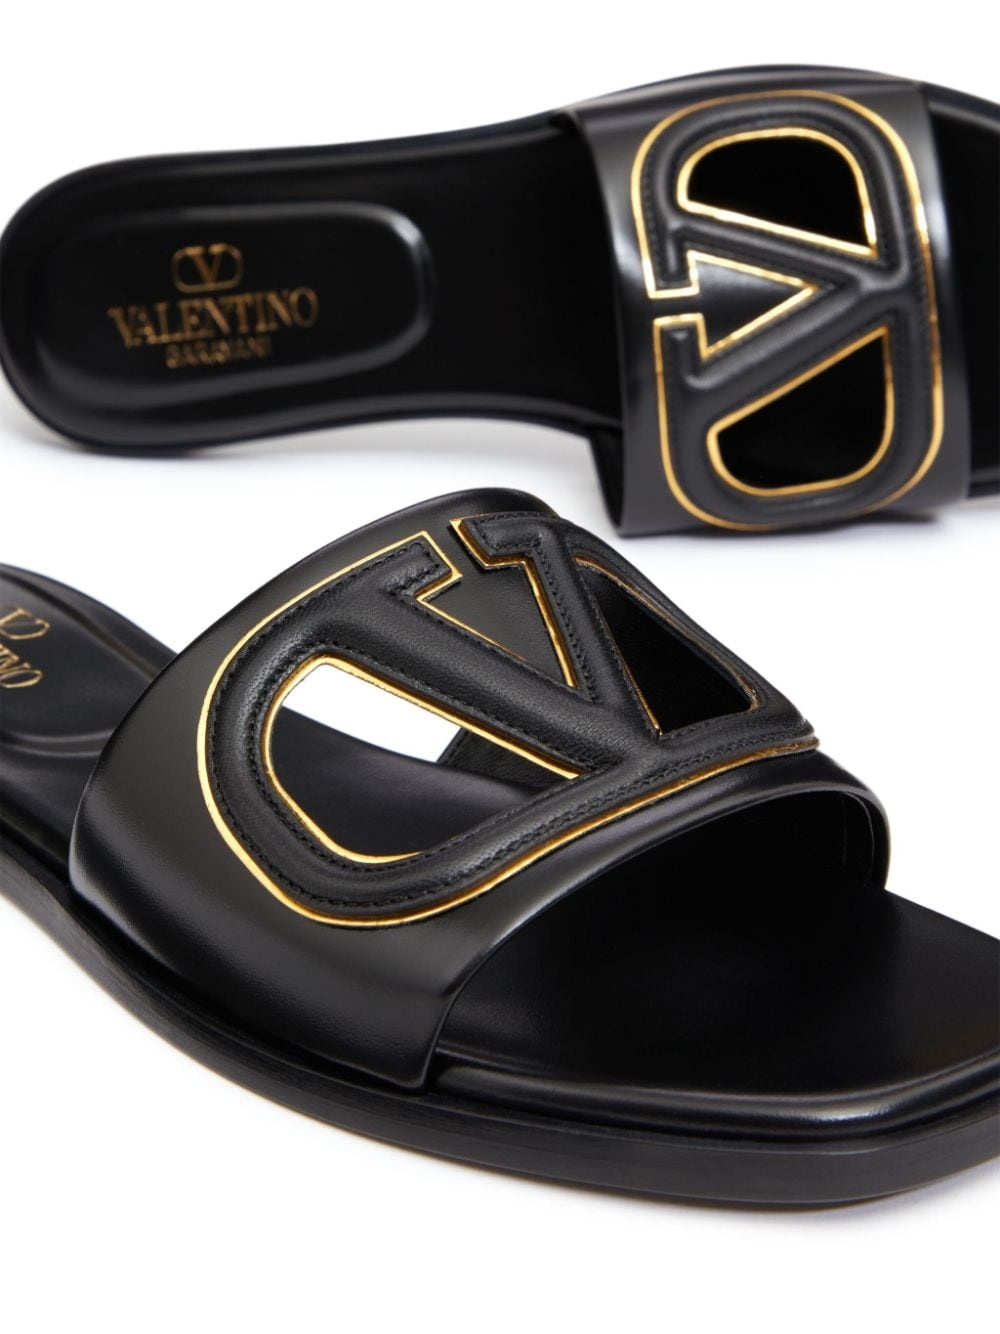 VLogo Signature leather sandals - 5